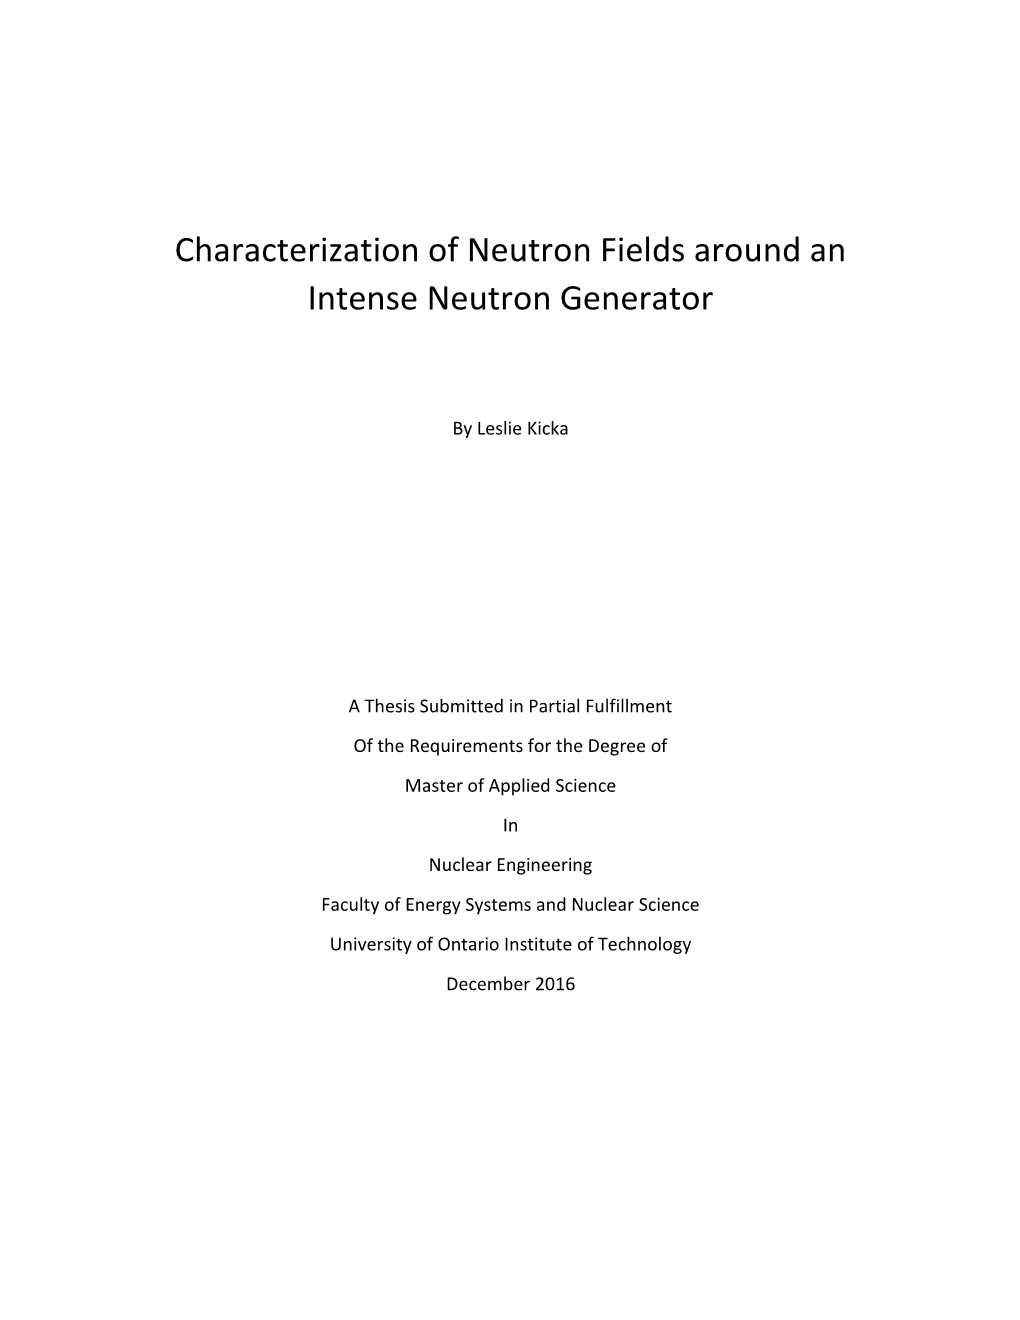 Characterization of Neutron Fields Around an Intense Neutron Generator